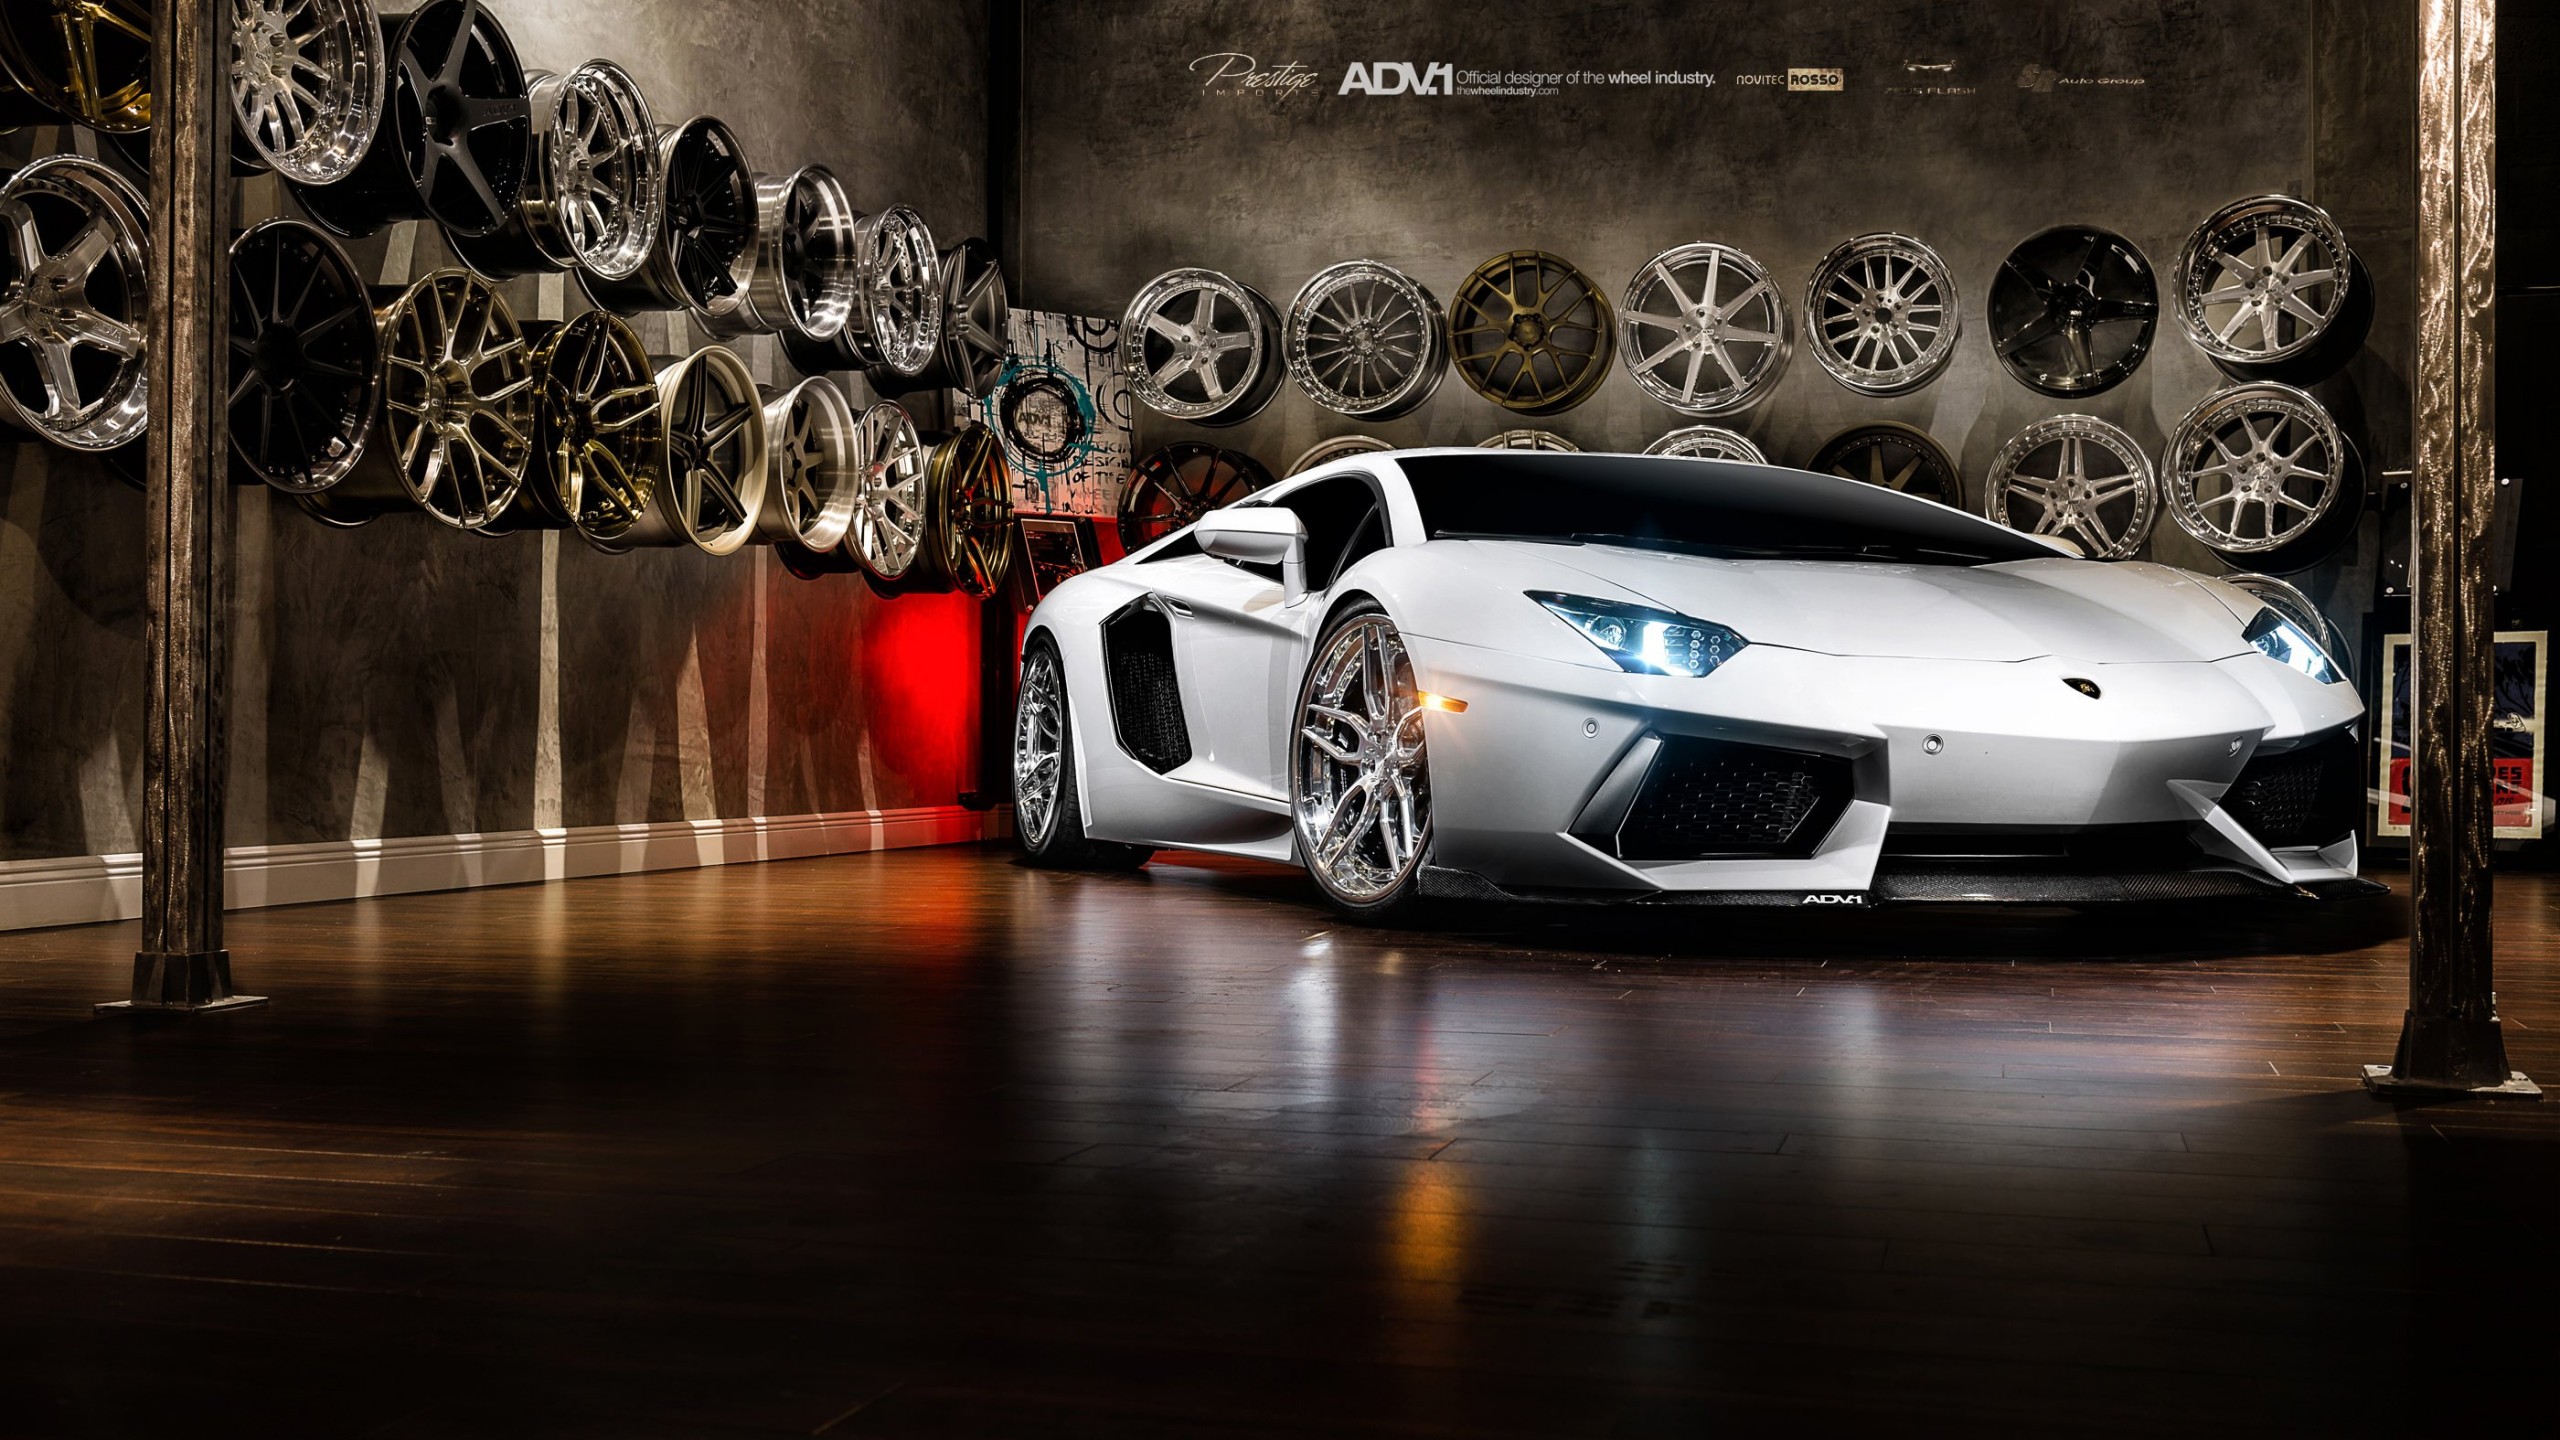 Lamborghini Aventador On ADV.1 Wheels Wallpaper for Social Media YouTube Channel Art